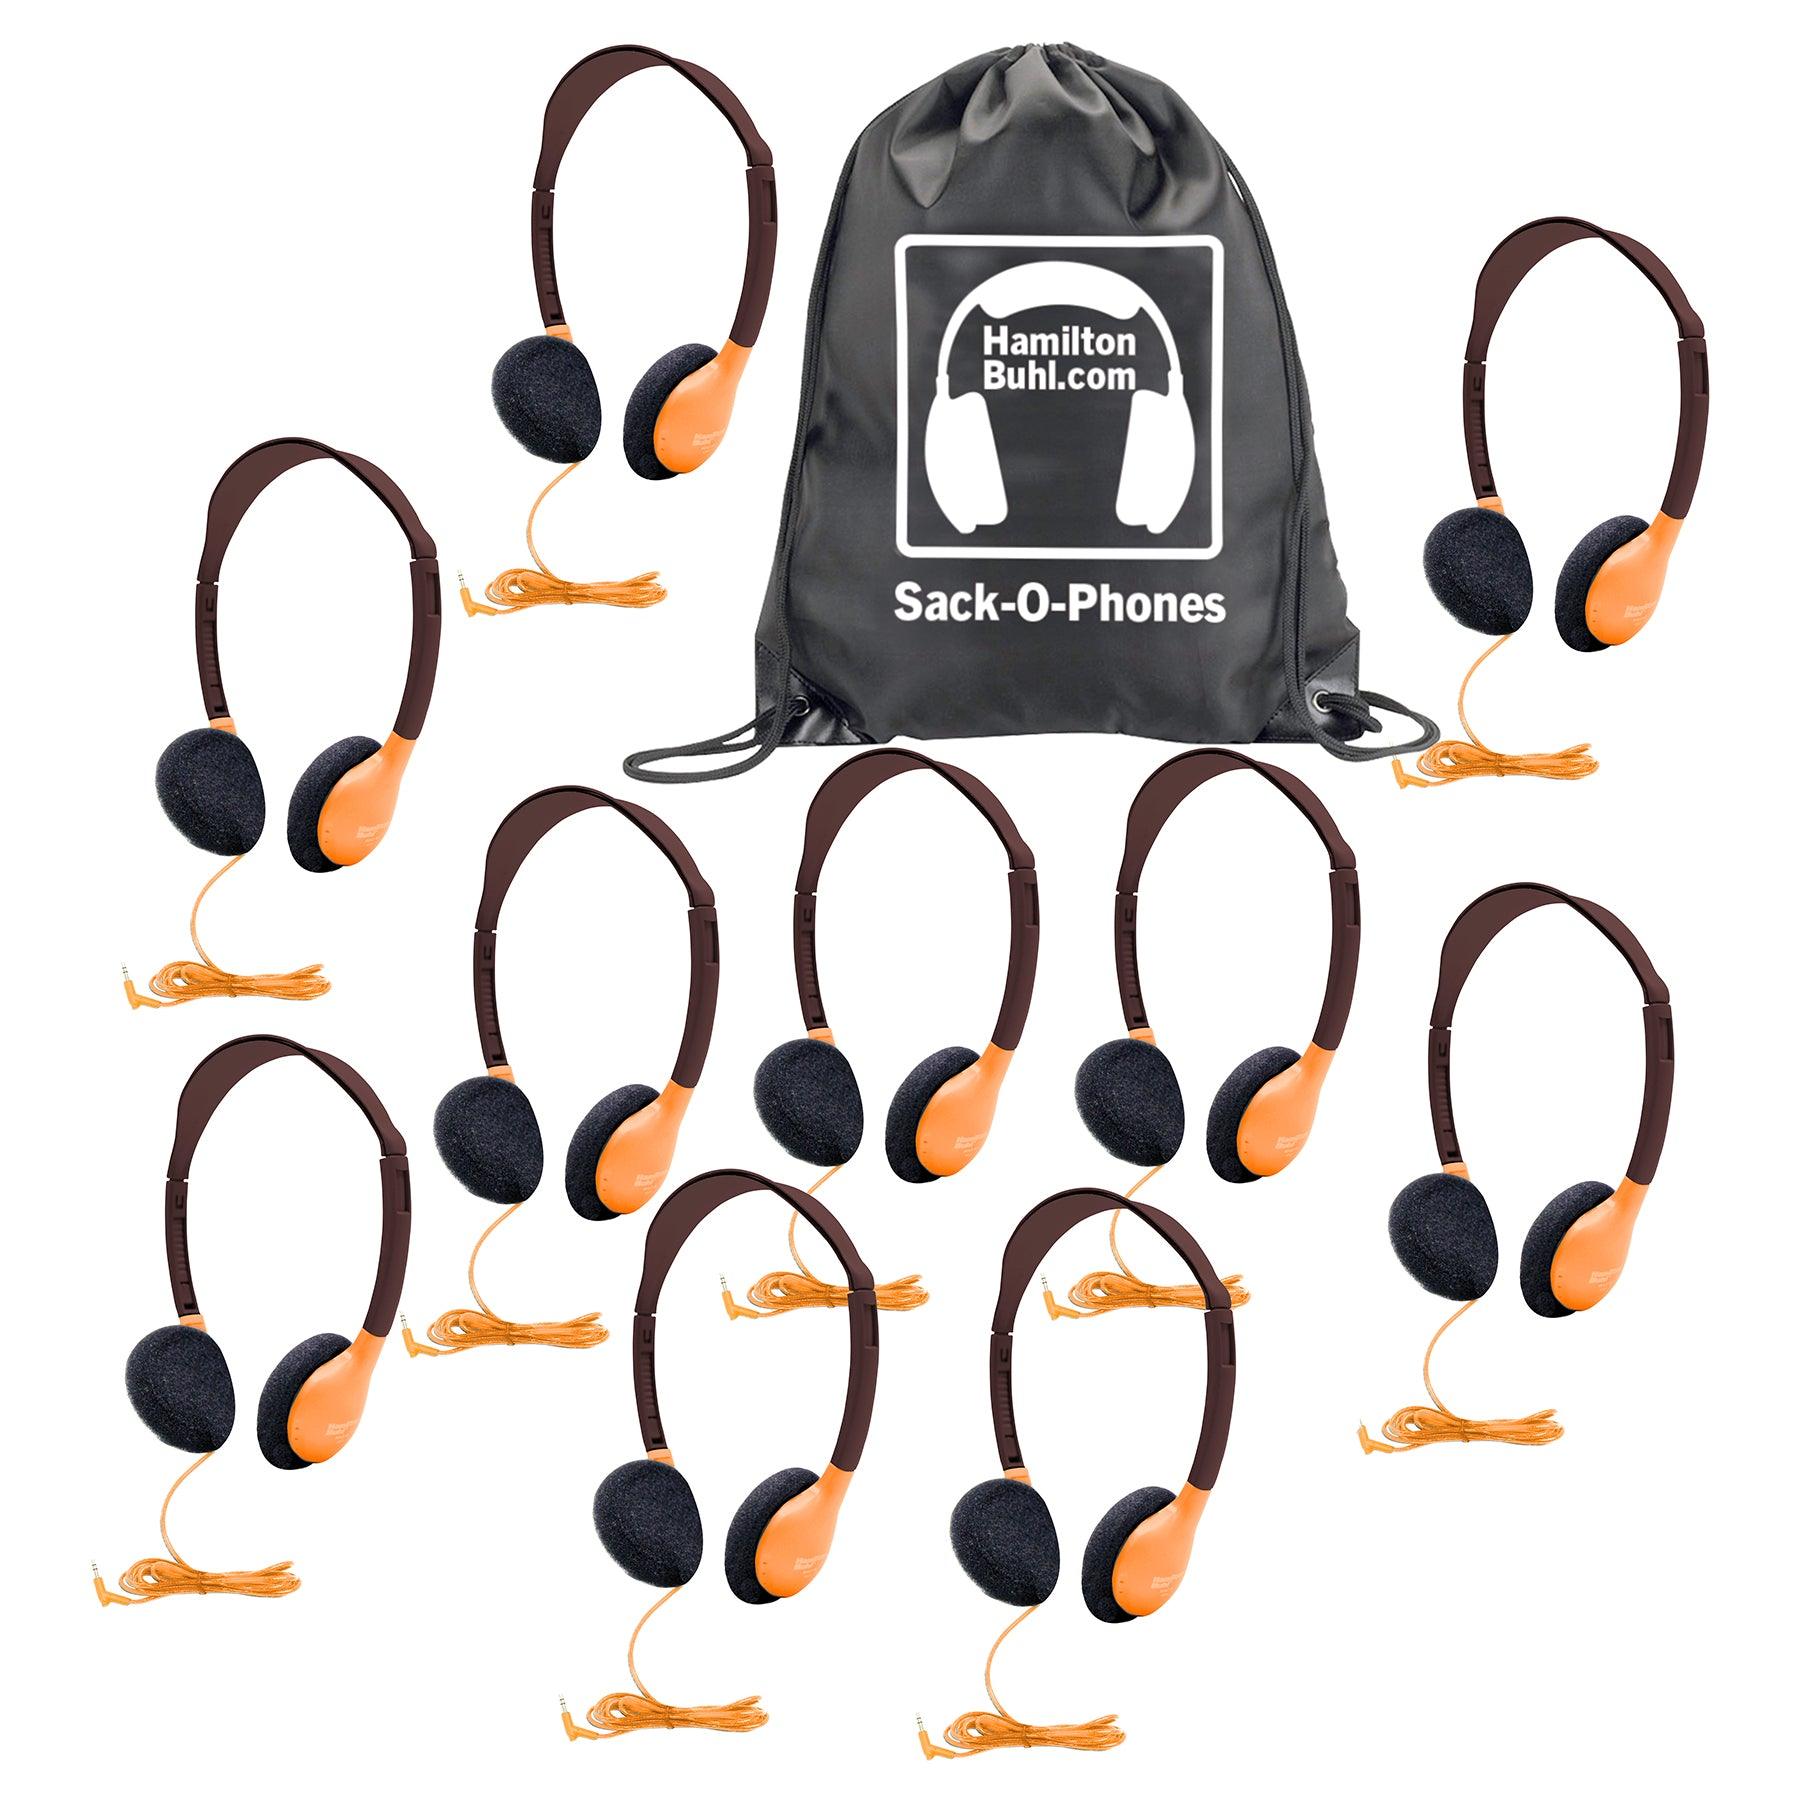 Sack-O-Phones, 10 Personal Headphones in a Carry Bag, Orange - Loomini